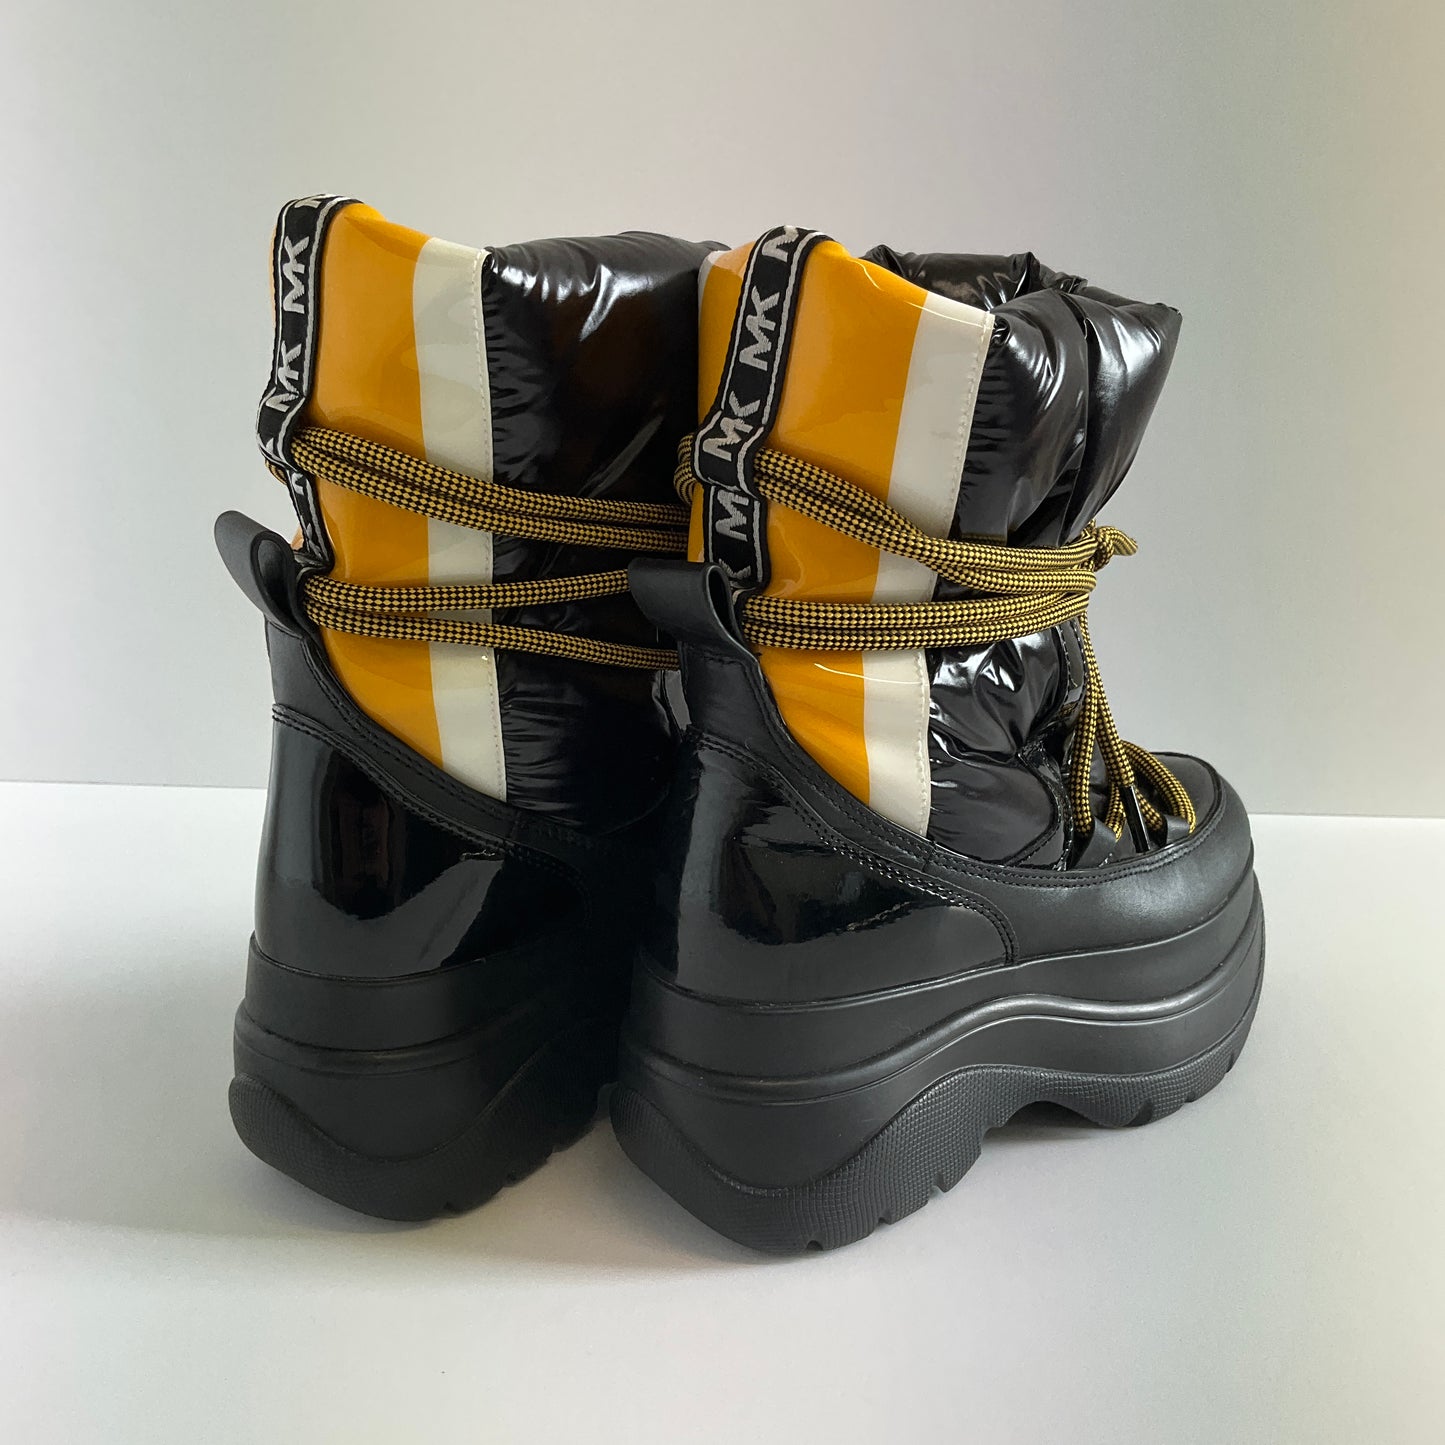 Michael Kors - Zadie Black/Yellow Boots - Size 7M